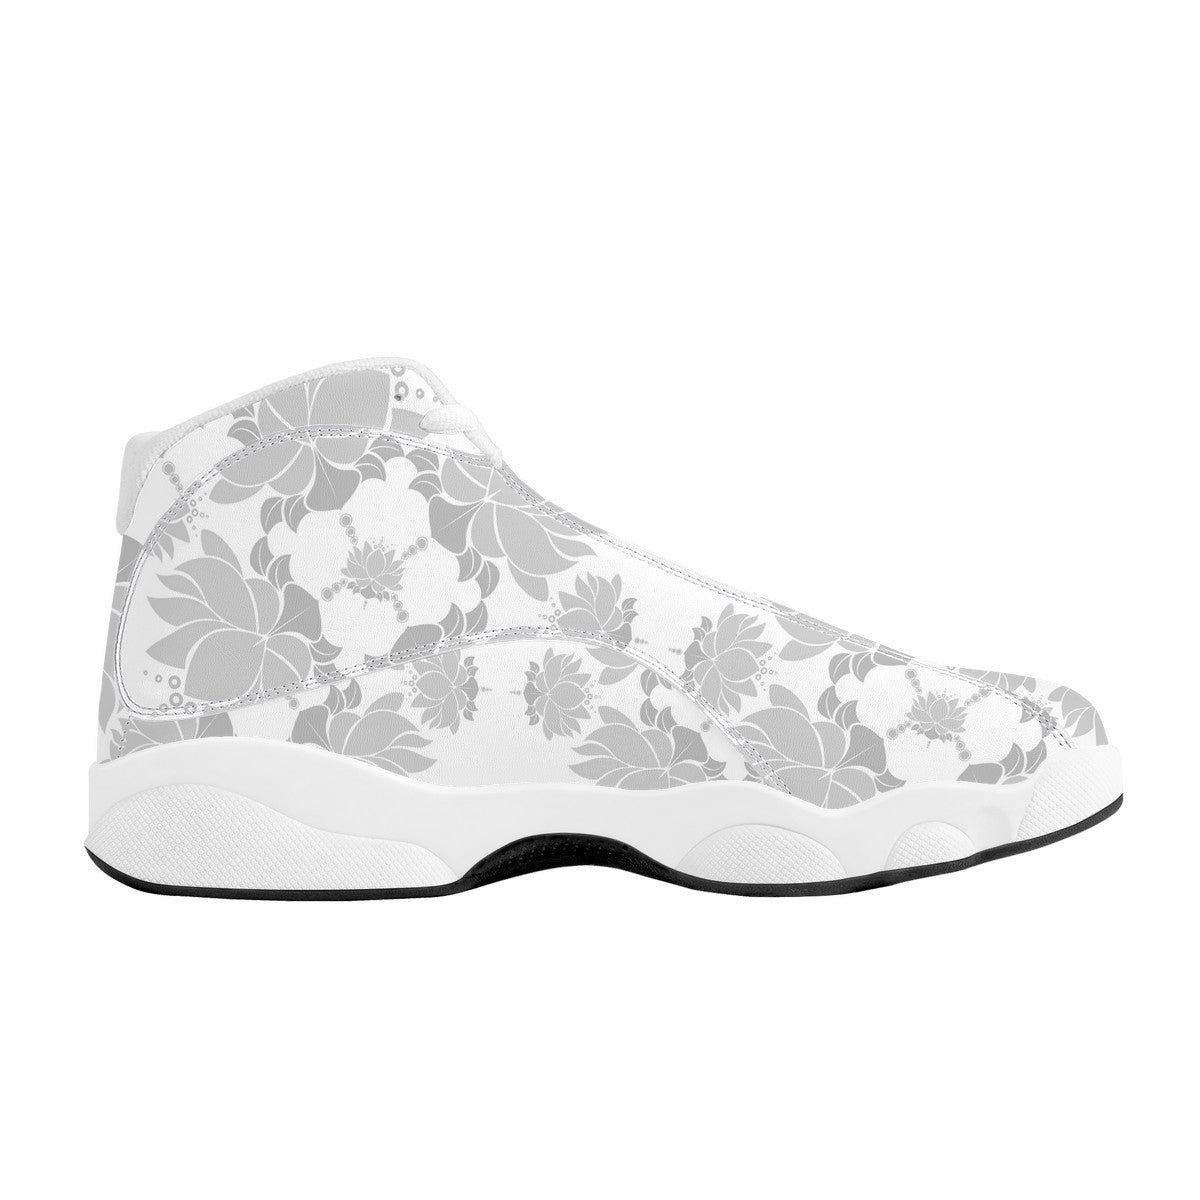 "Nix Lotus" Basketball Shoes